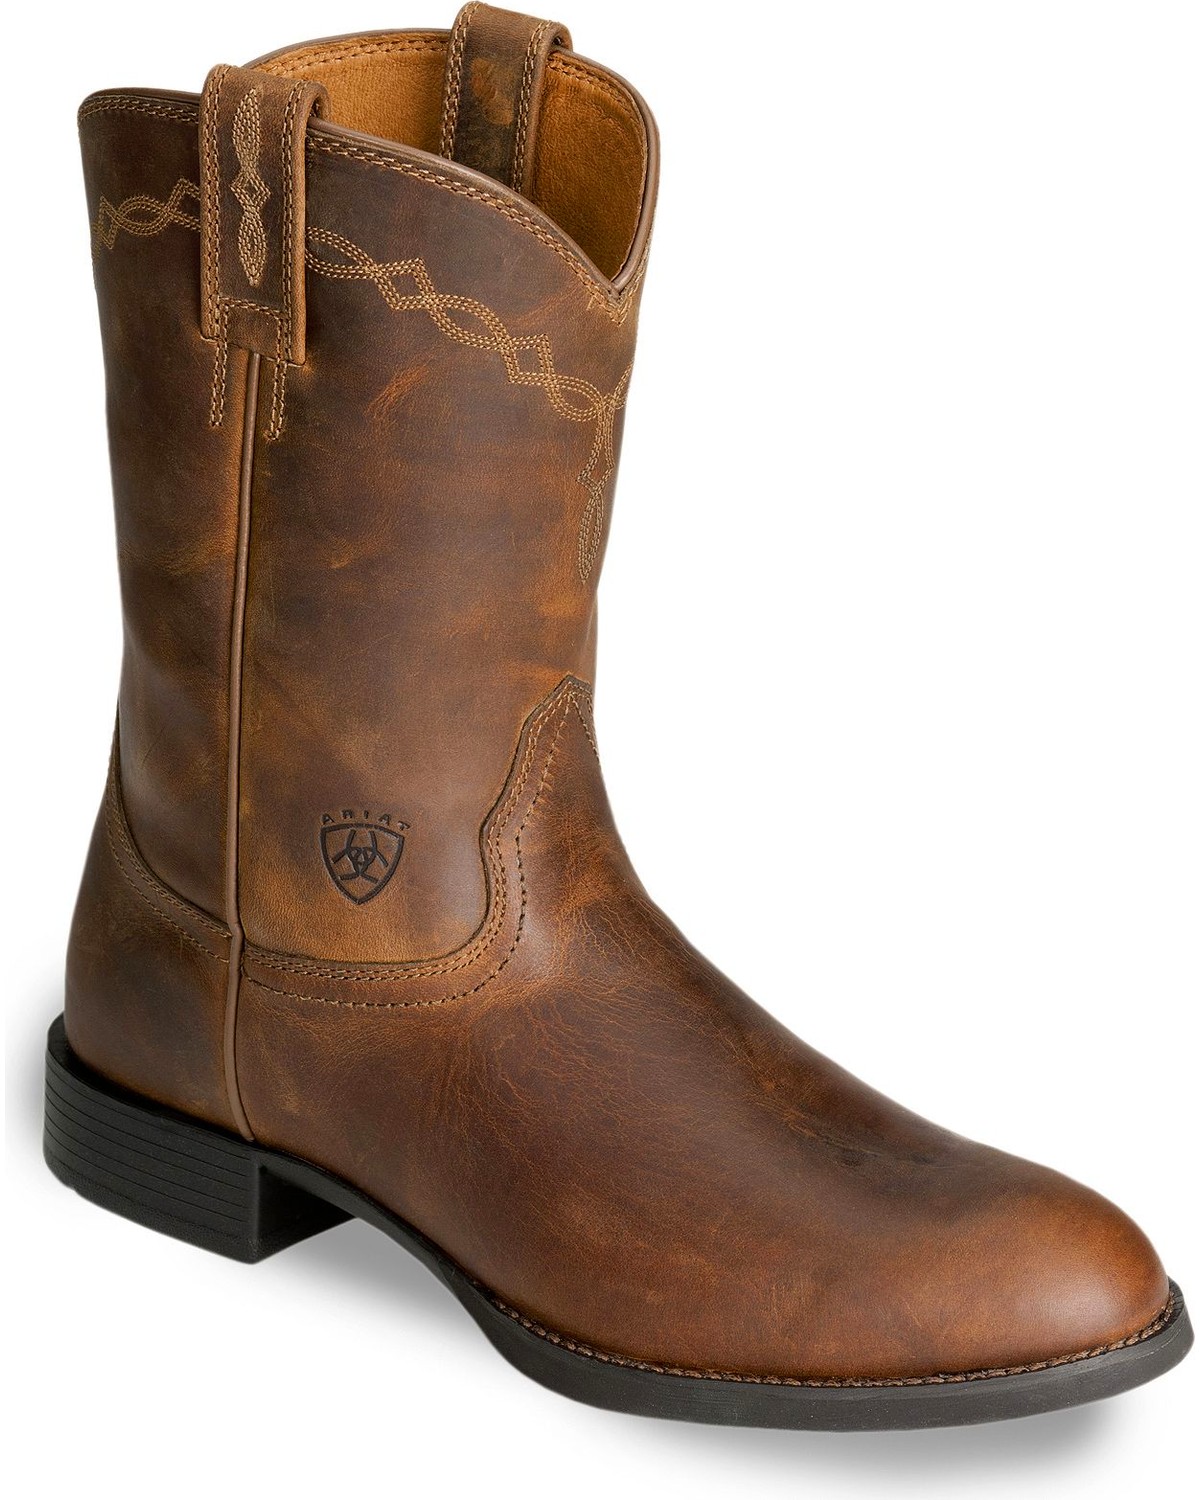 Men's Comfortable Cowboy Boots